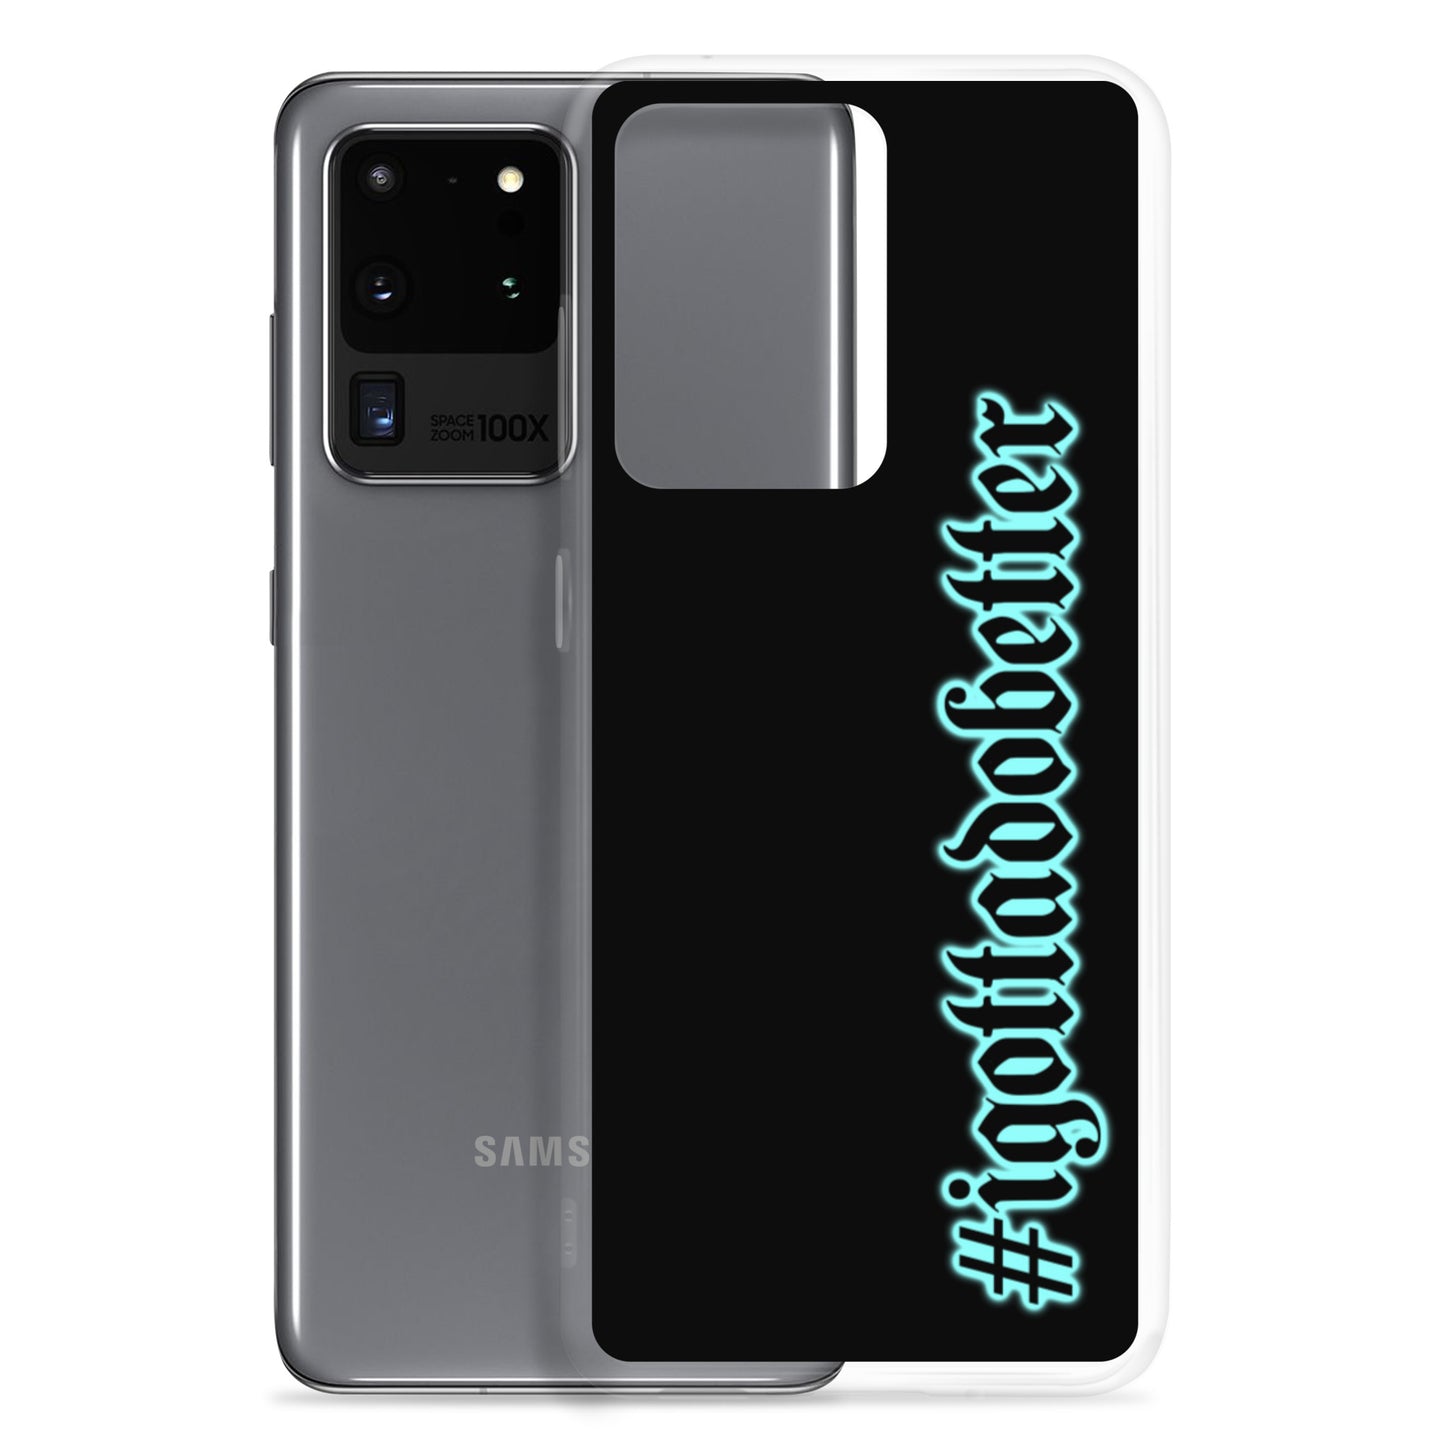 Samsung - #igottodobetter- teal/blk